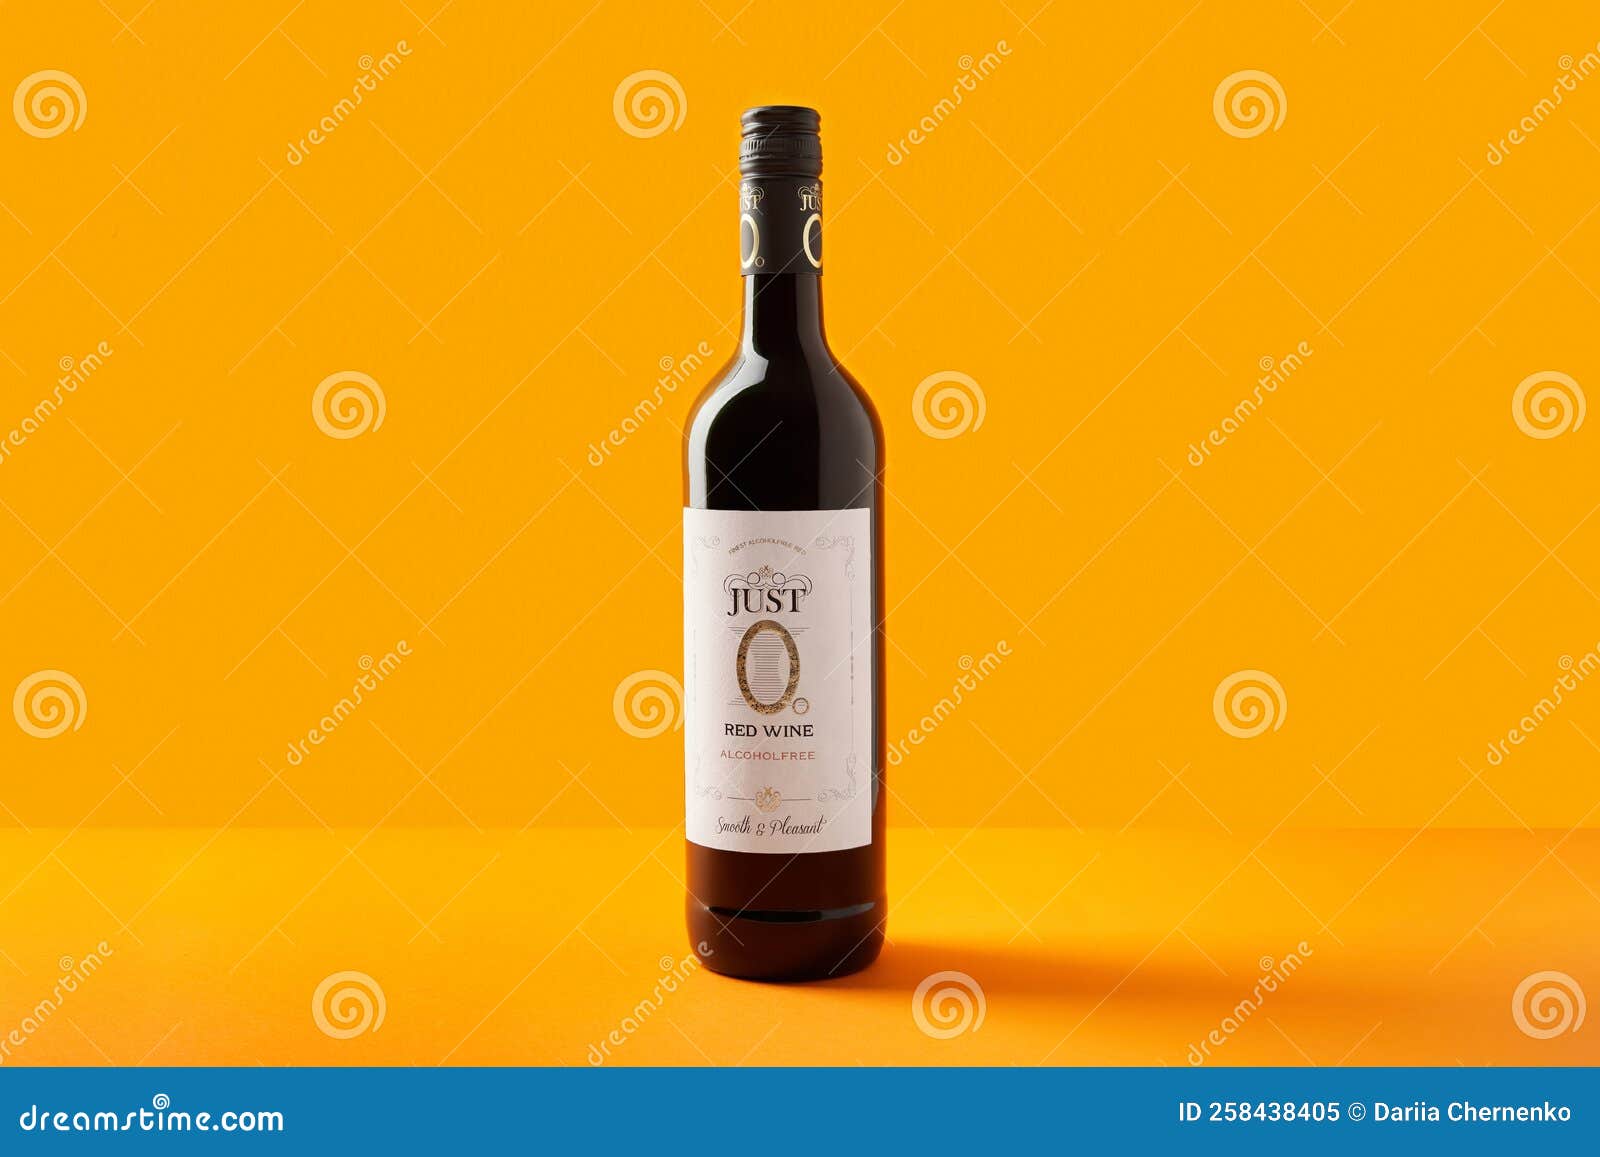 UKRAINE - SEPTEMBER 22, 2021. Bottle of Alcohol Free Peter Mertes 0 Wine on Orange Background Editorial Image - Image of cabernet, wine: 258438405